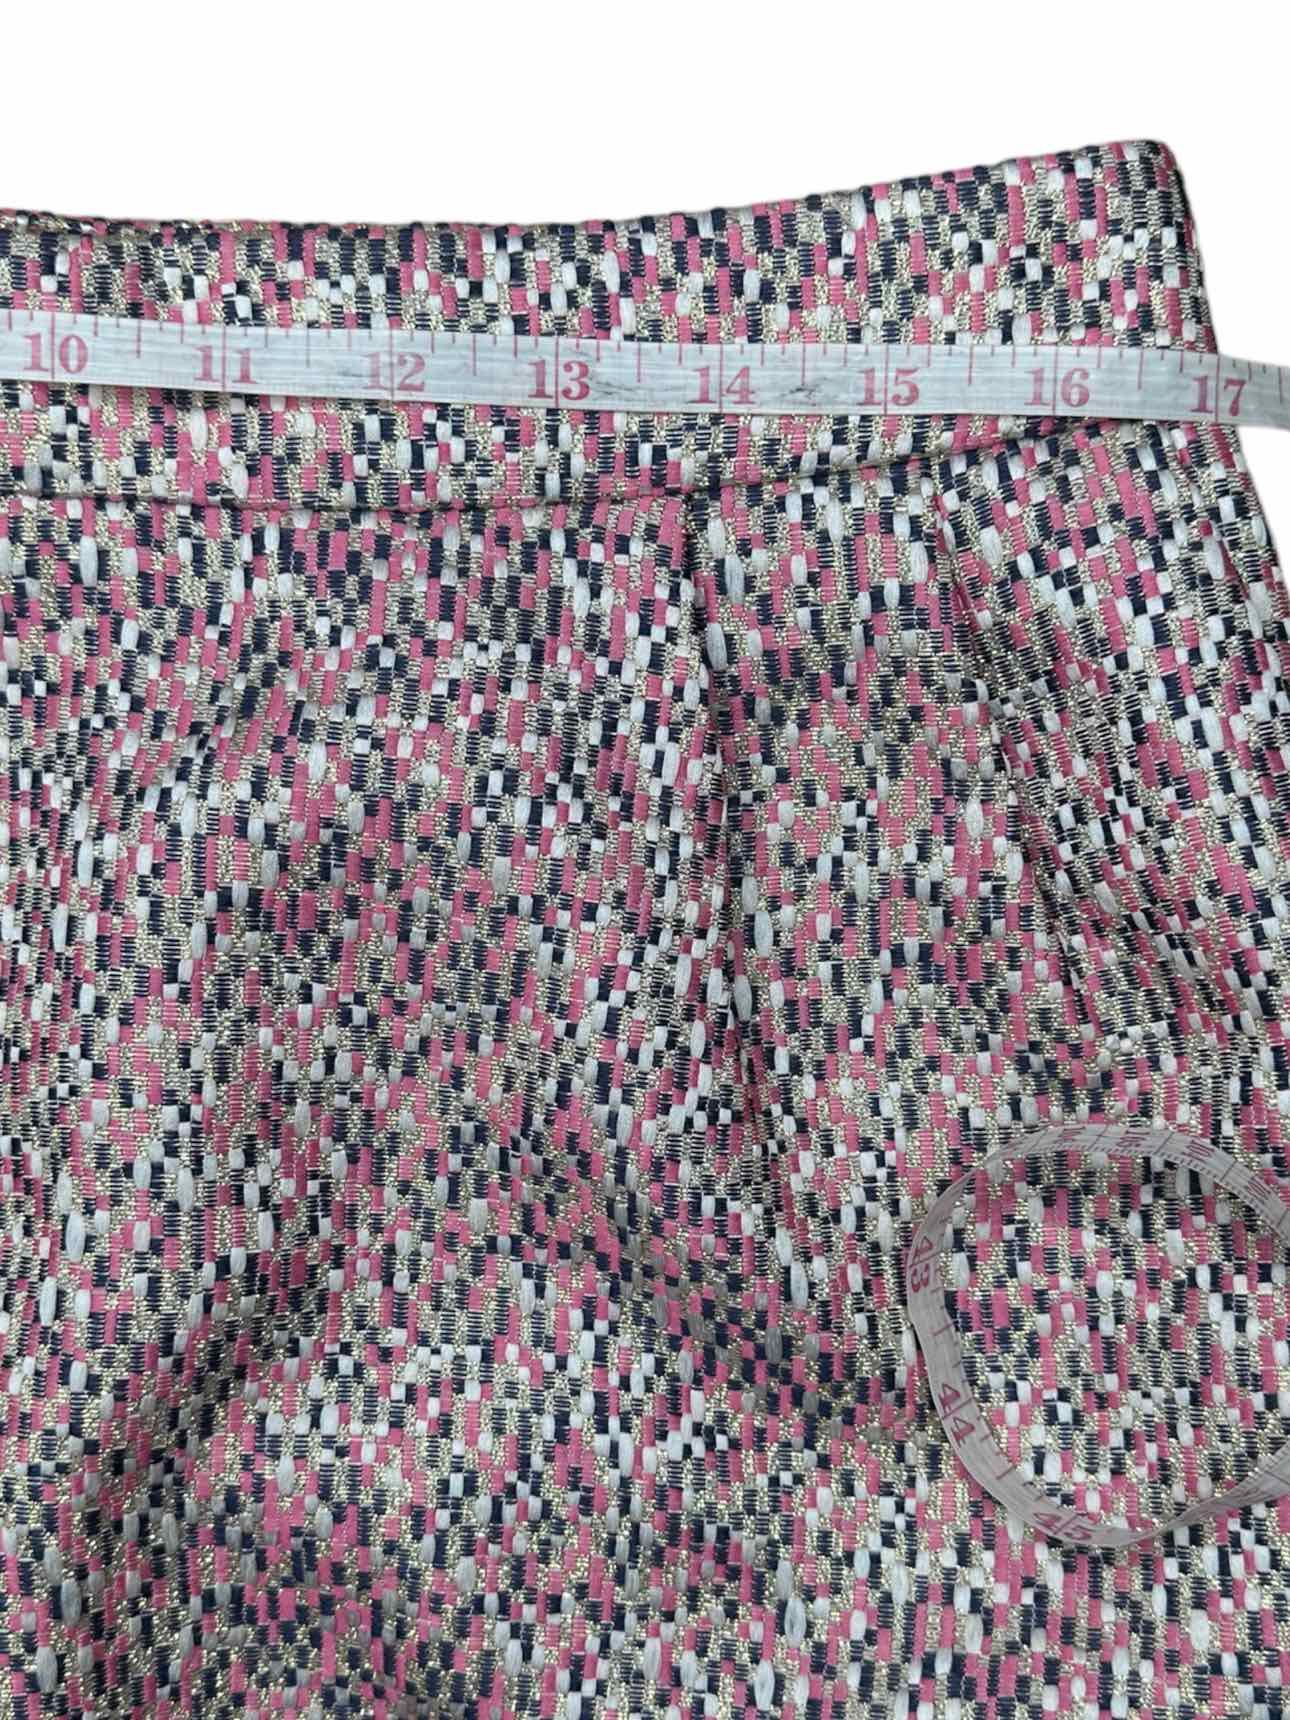 J. Crew Pink Brocade Mini Skirt Size 8